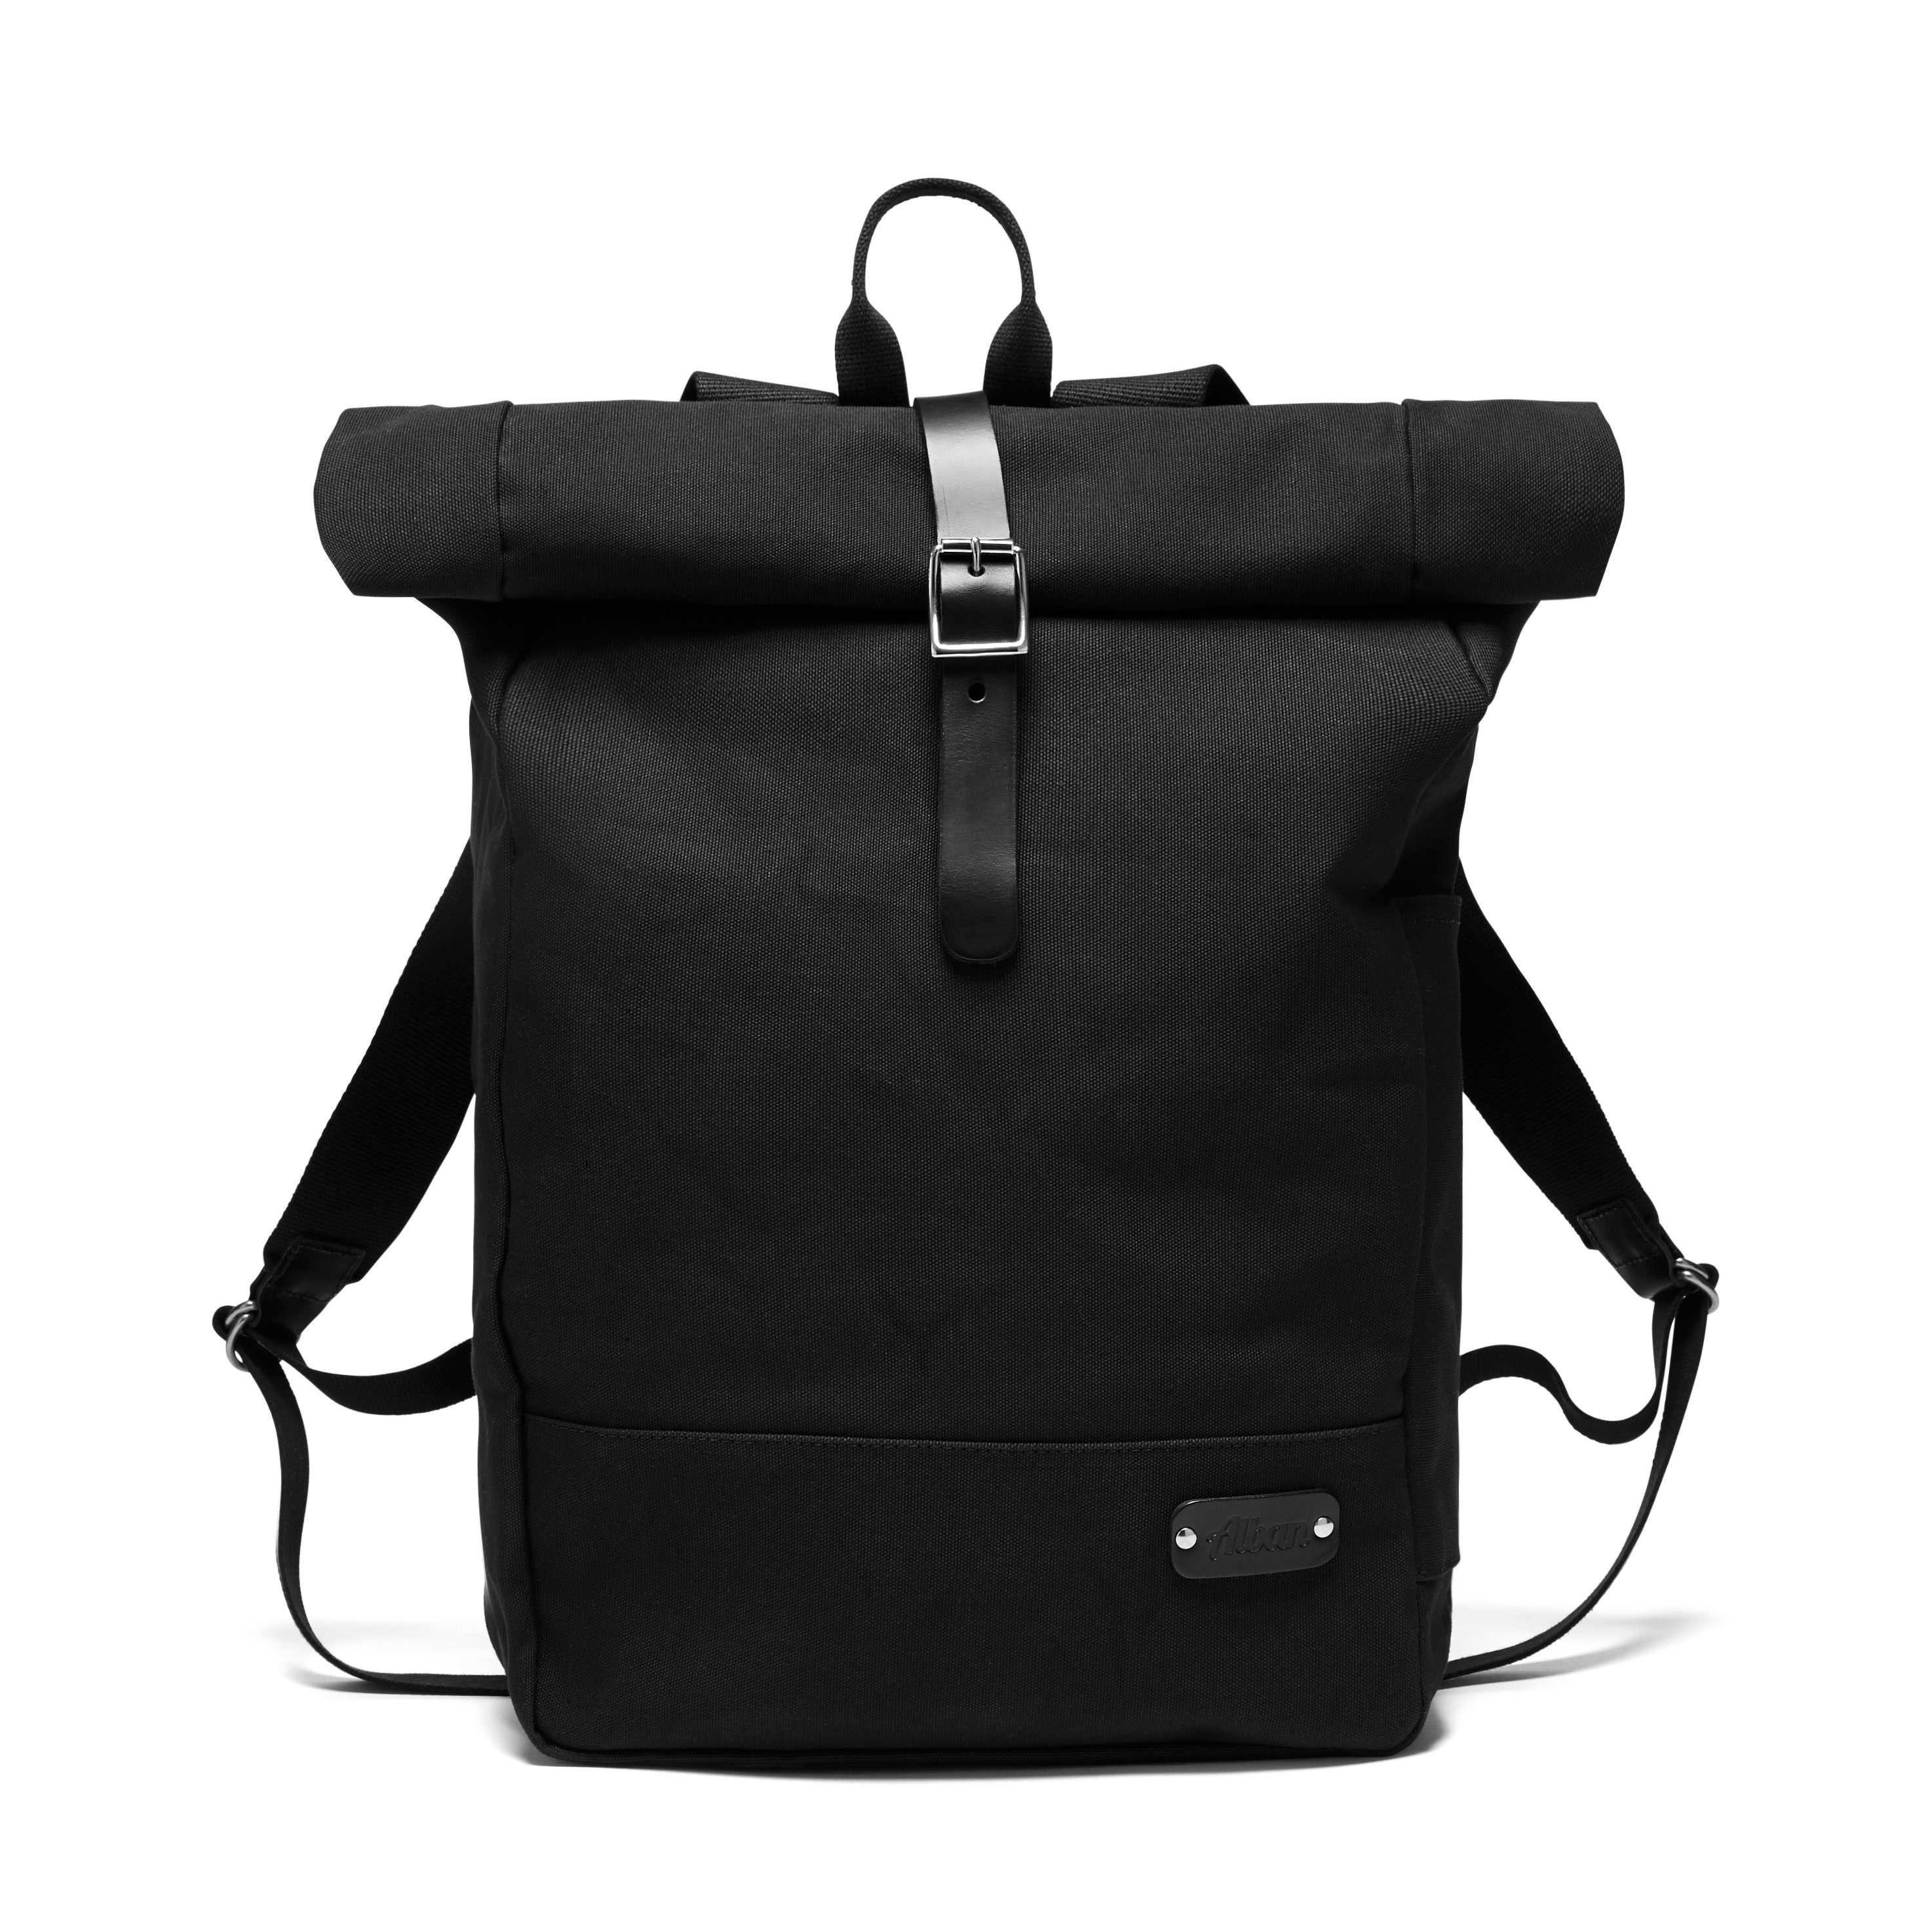 Backpack / Rucksack / Roll Top Backpack / Canvas Backpack / | Etsy